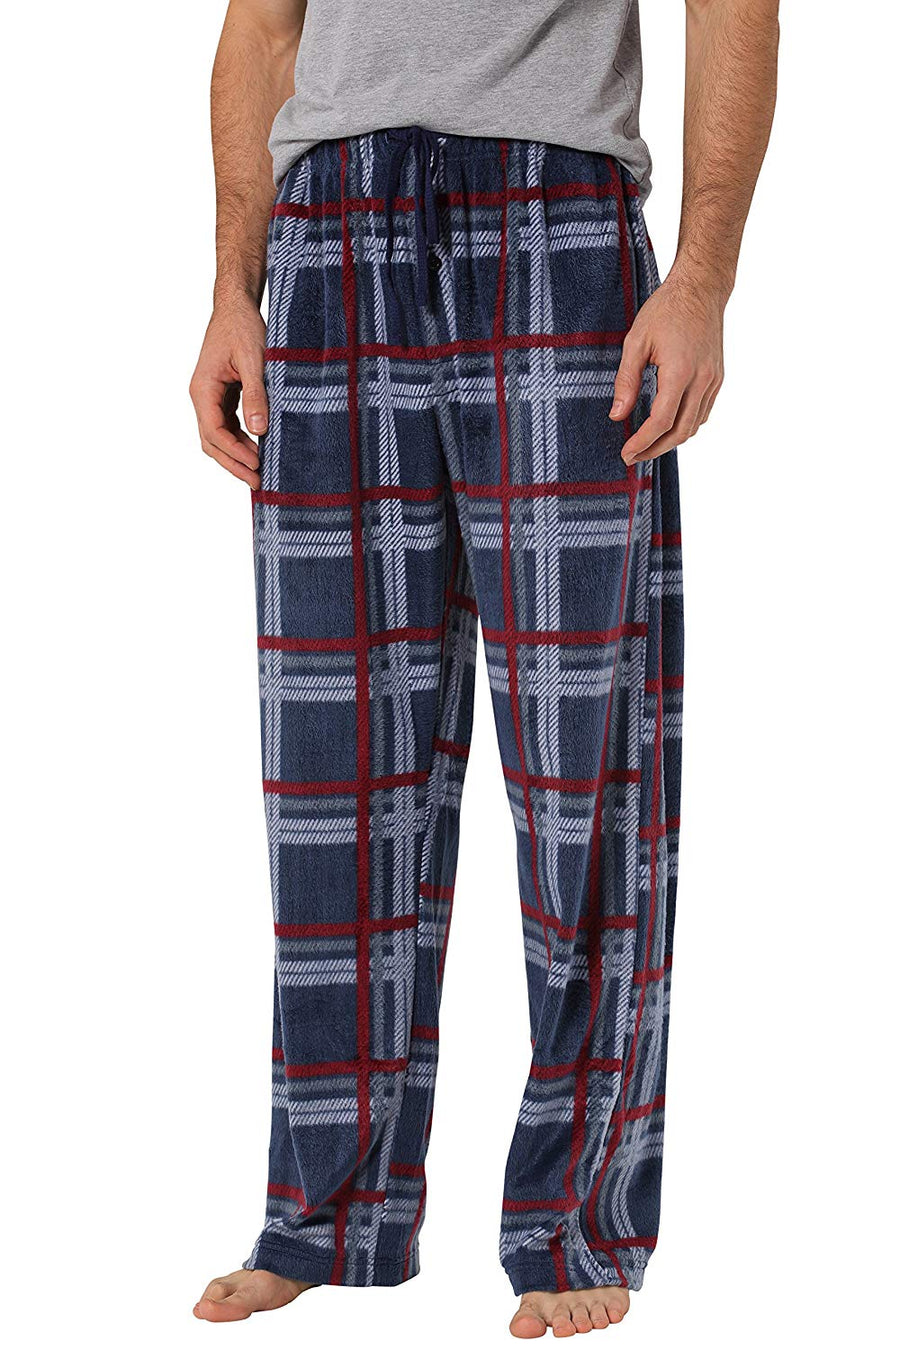 eczipvz Mens Casual Shorts Pajama Plaid Casual Household Shorts